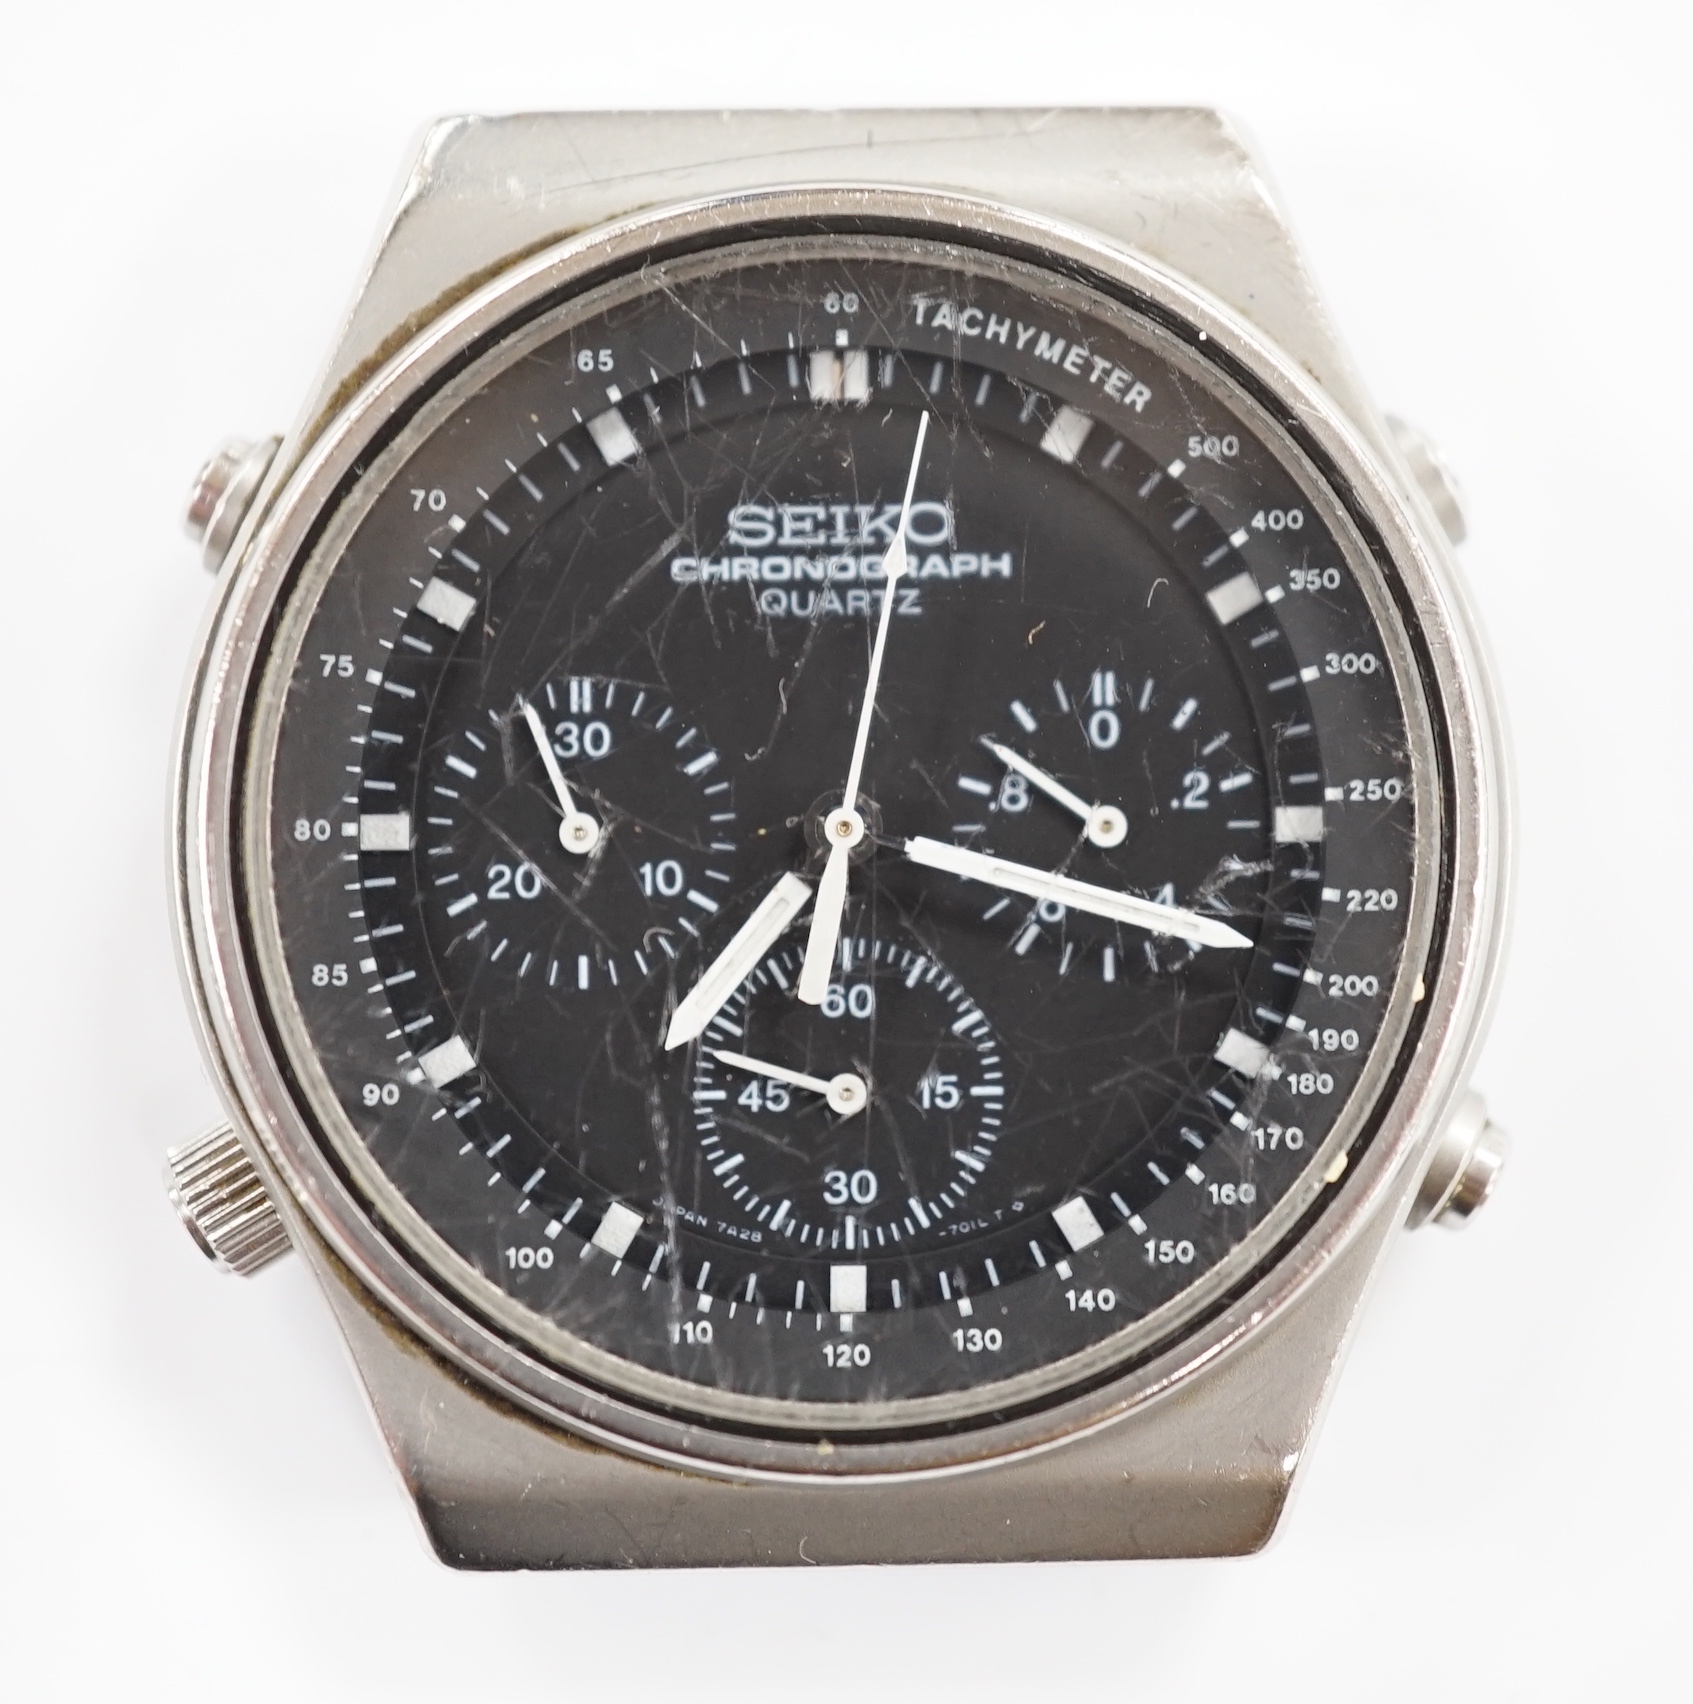 A gentleman's stainless steel Seiko chronograph quartz wrist watch, bracelet detached (no pins).